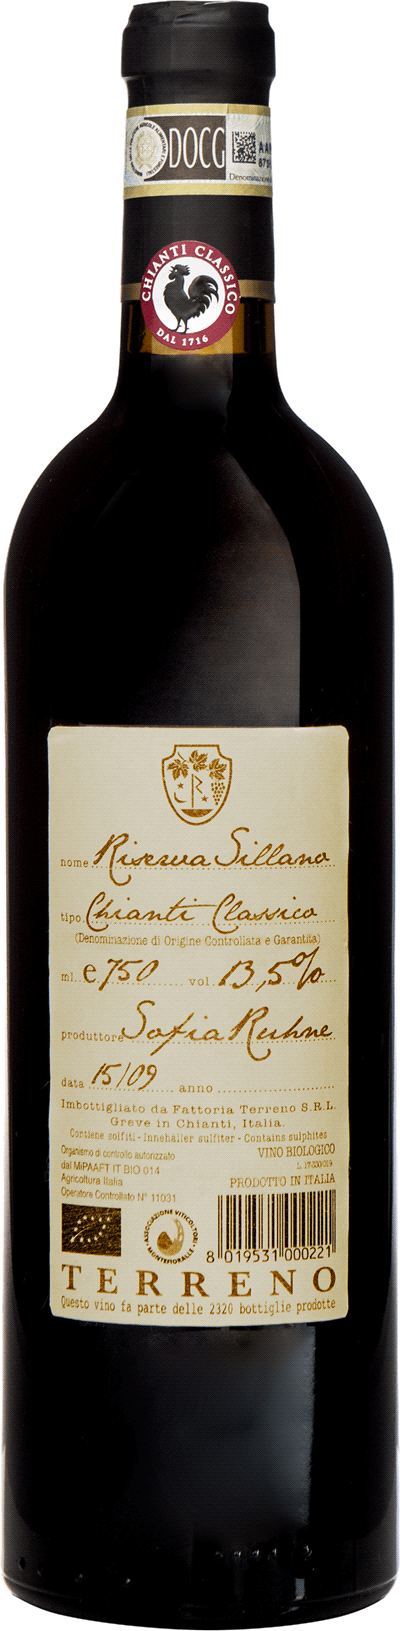 Rött vin Chianti Classico Italien